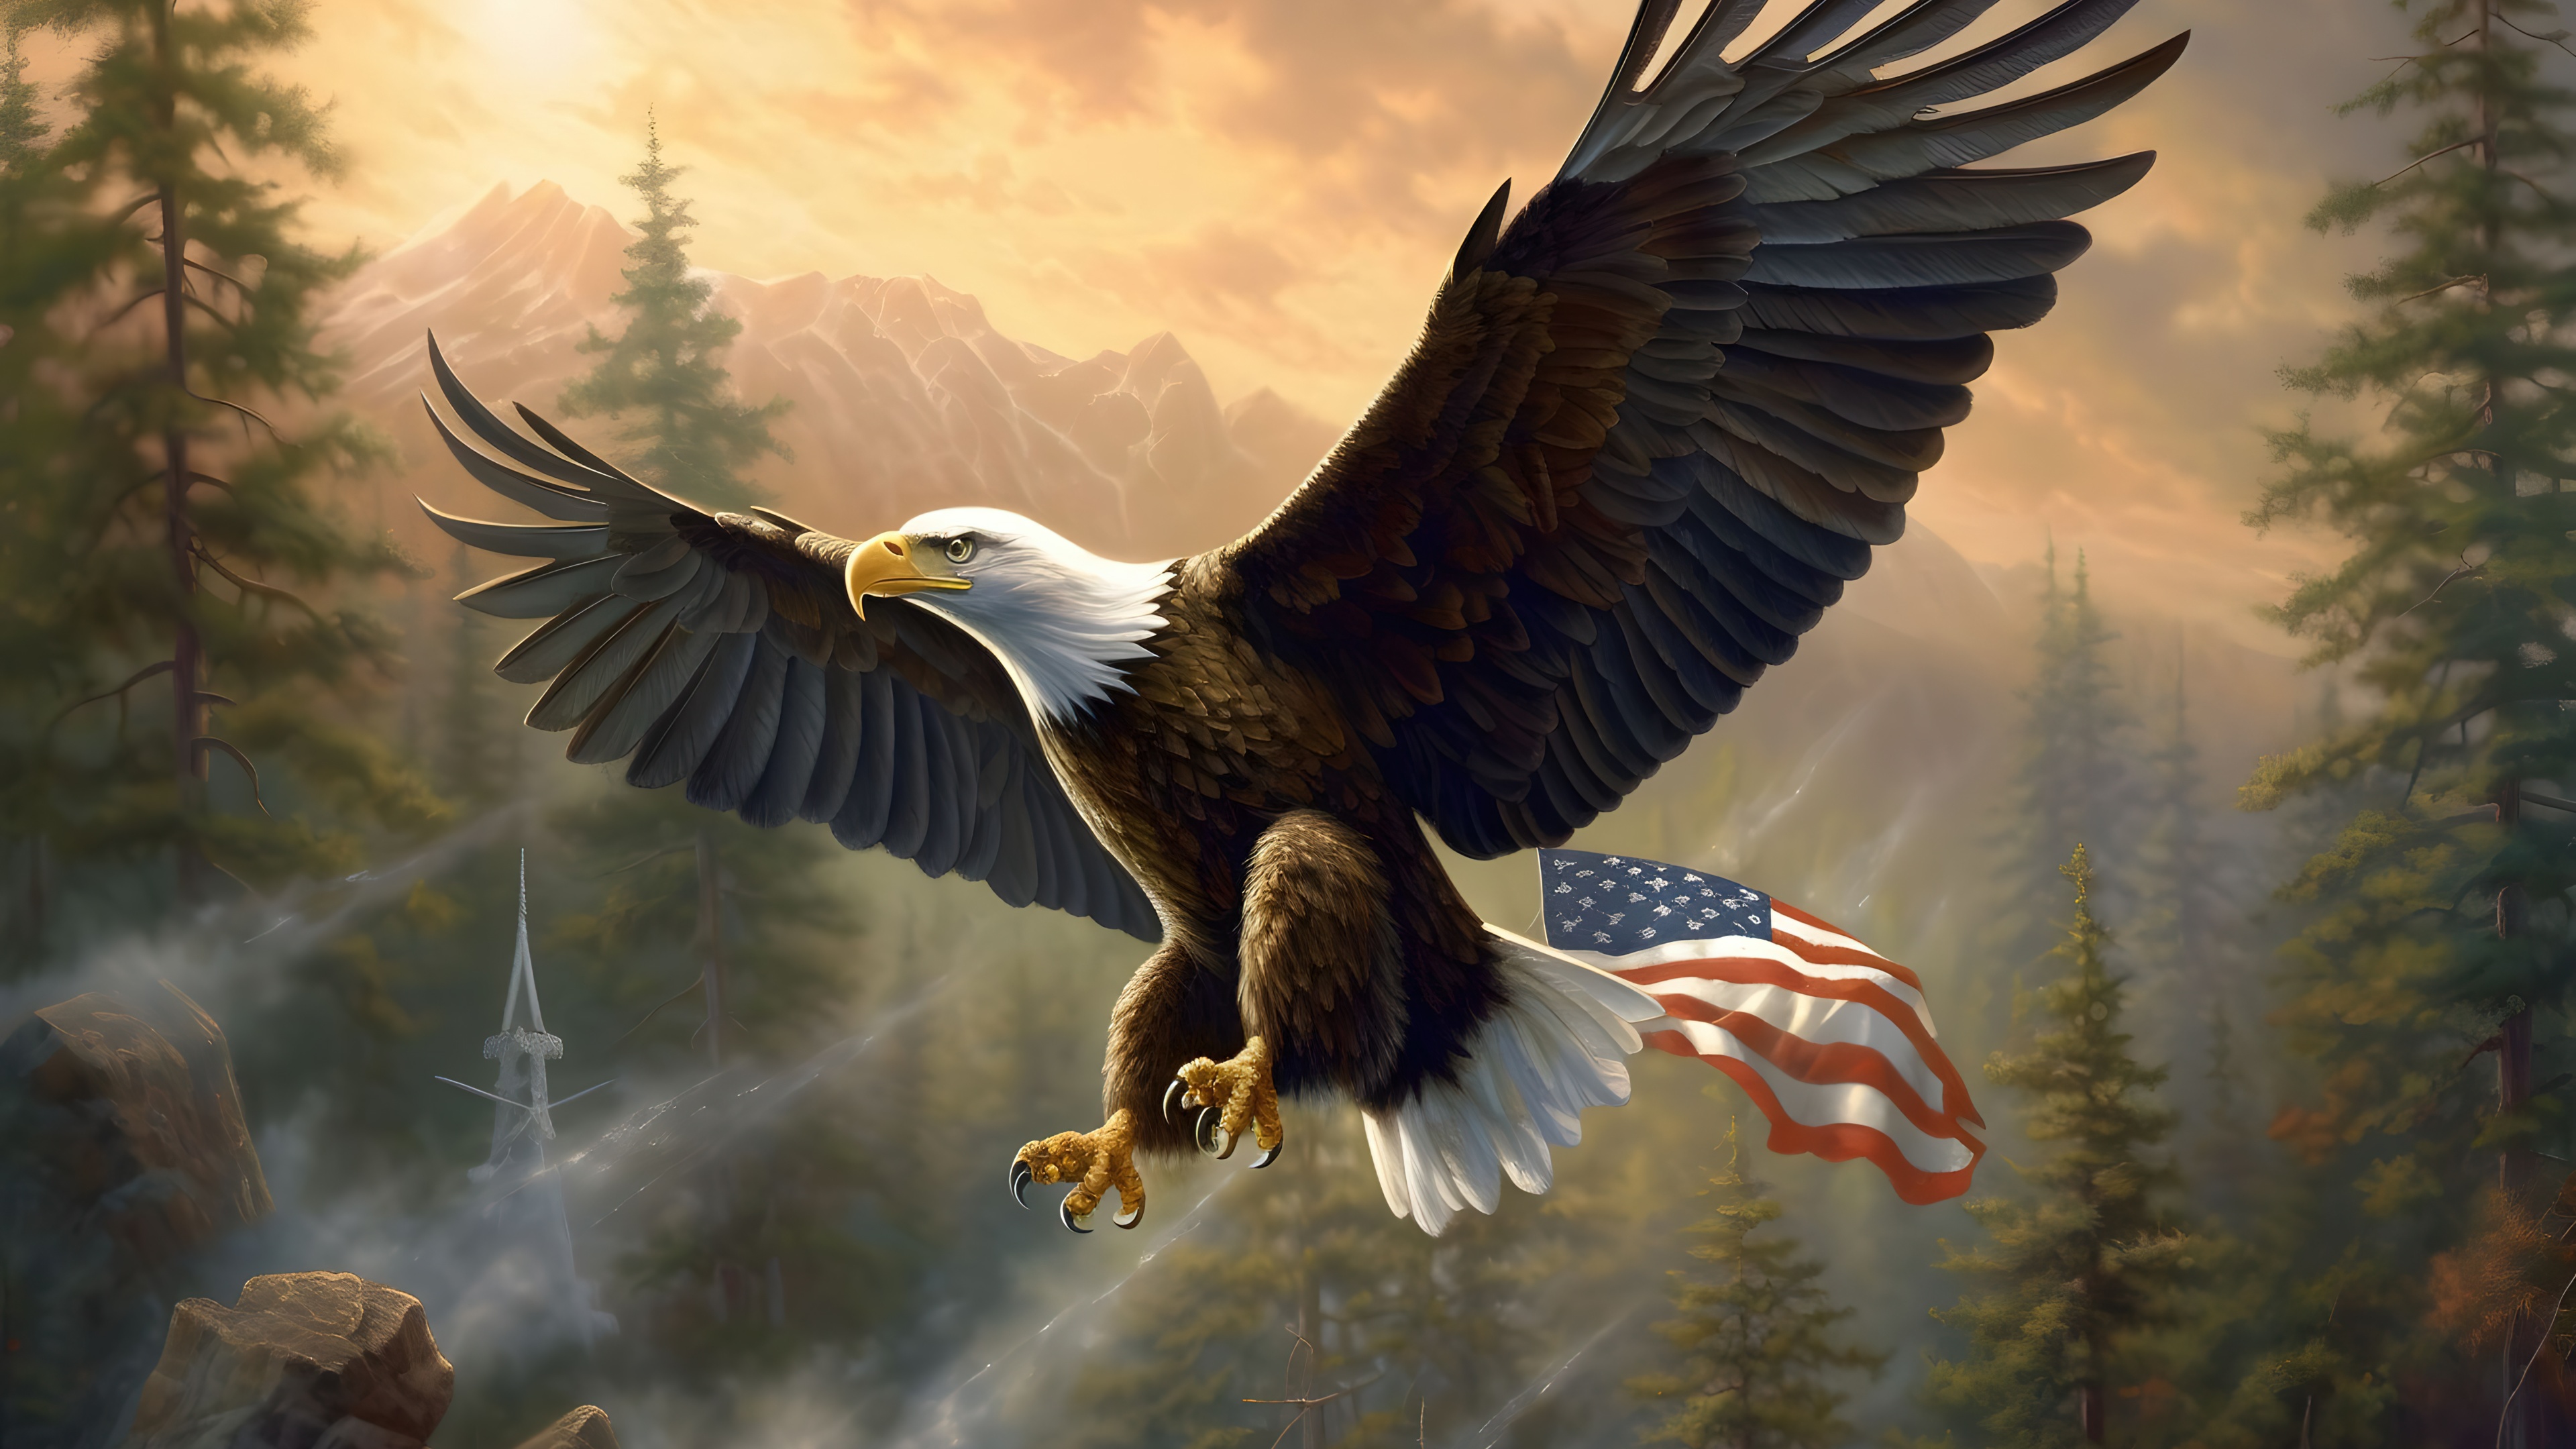 Eagle Flying Nature Mountain Sunrise Scenery Wallpaper 4K 43270